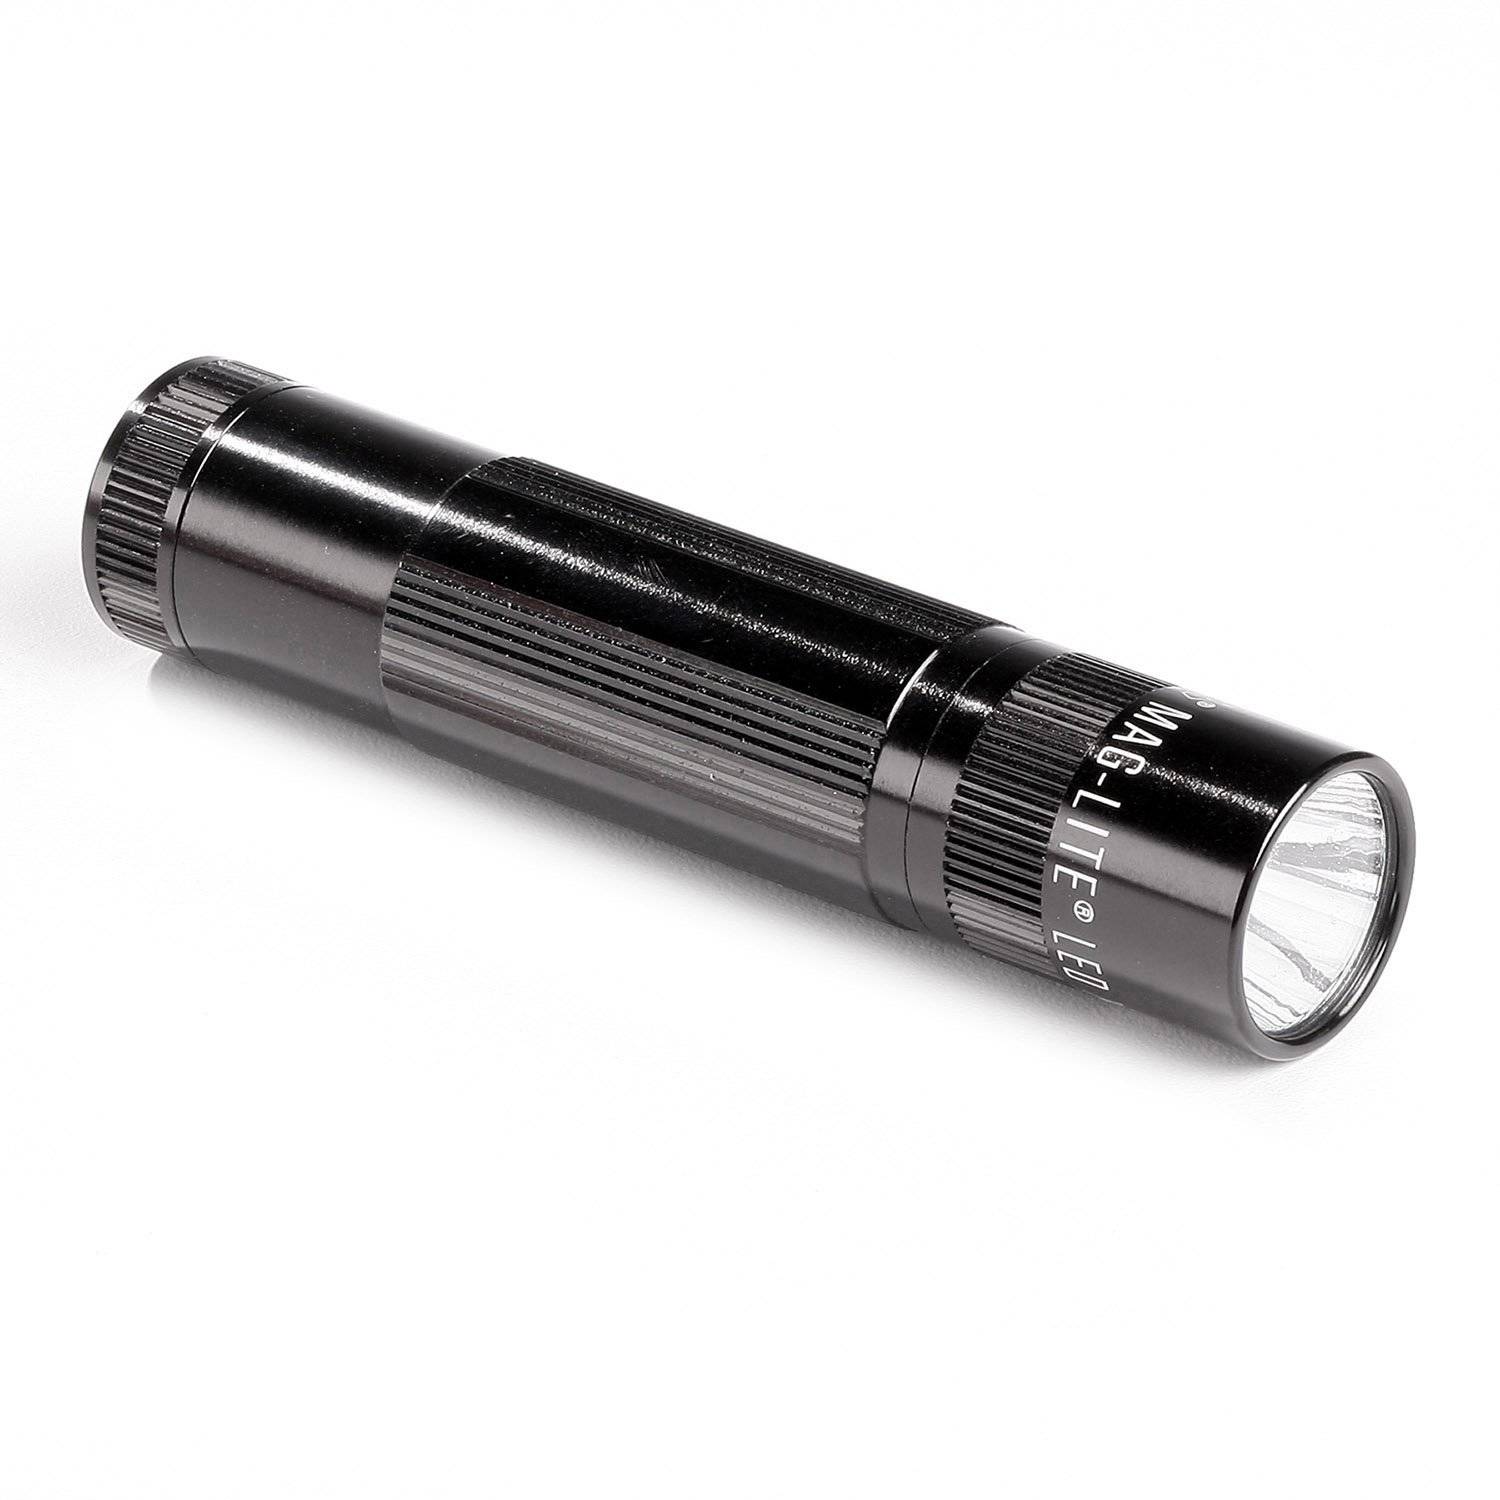 Maglite XL200 LED Tactical Flashlight